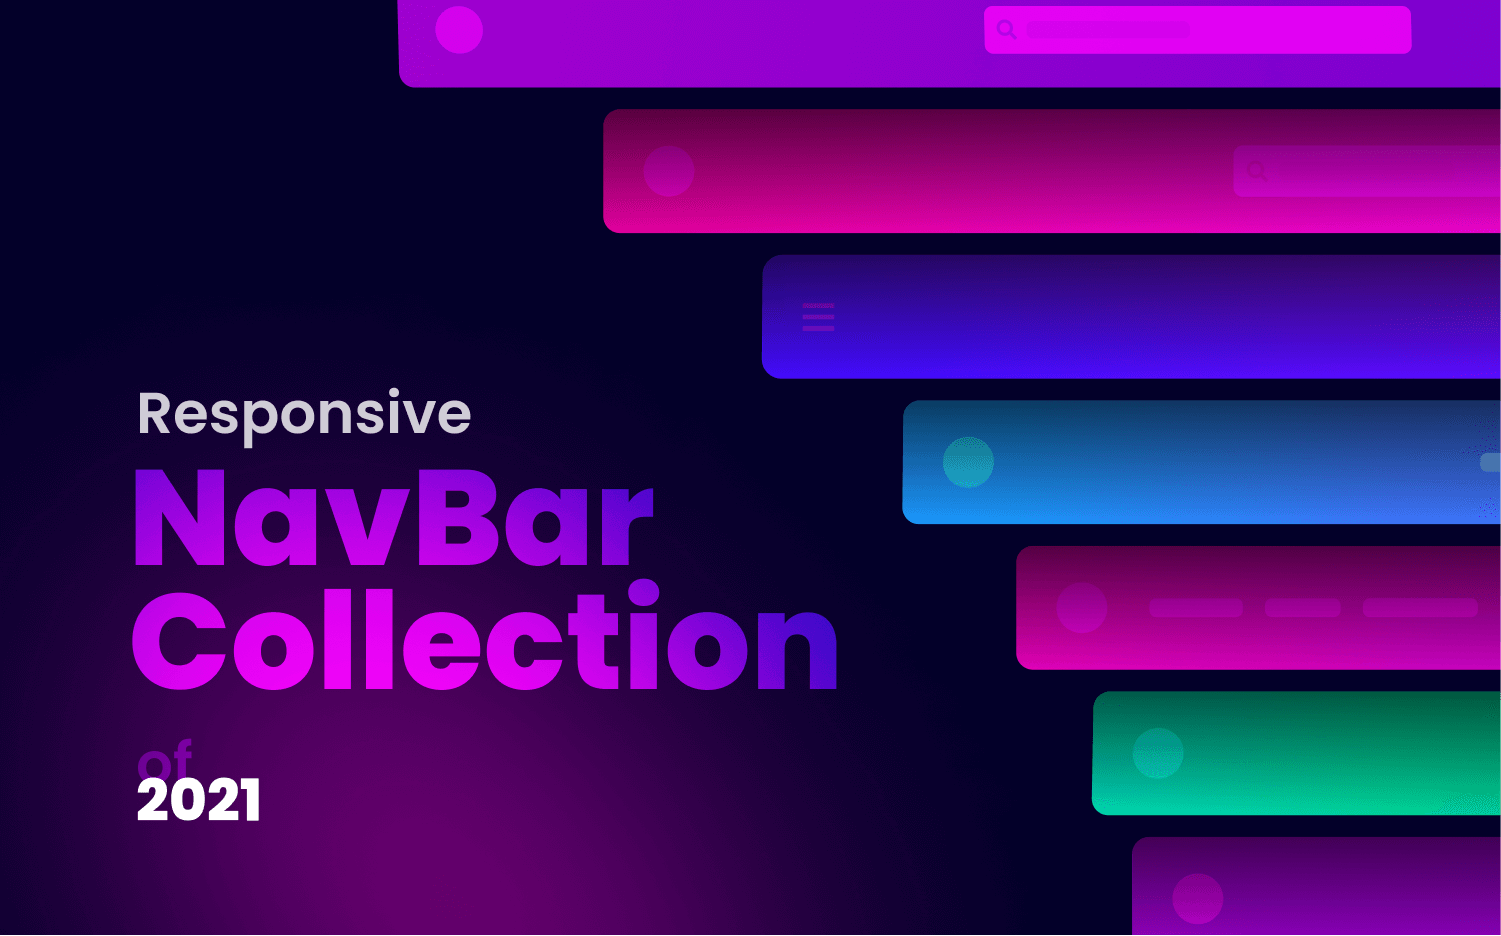 Top-notch Responsive Navbar collection of 2021